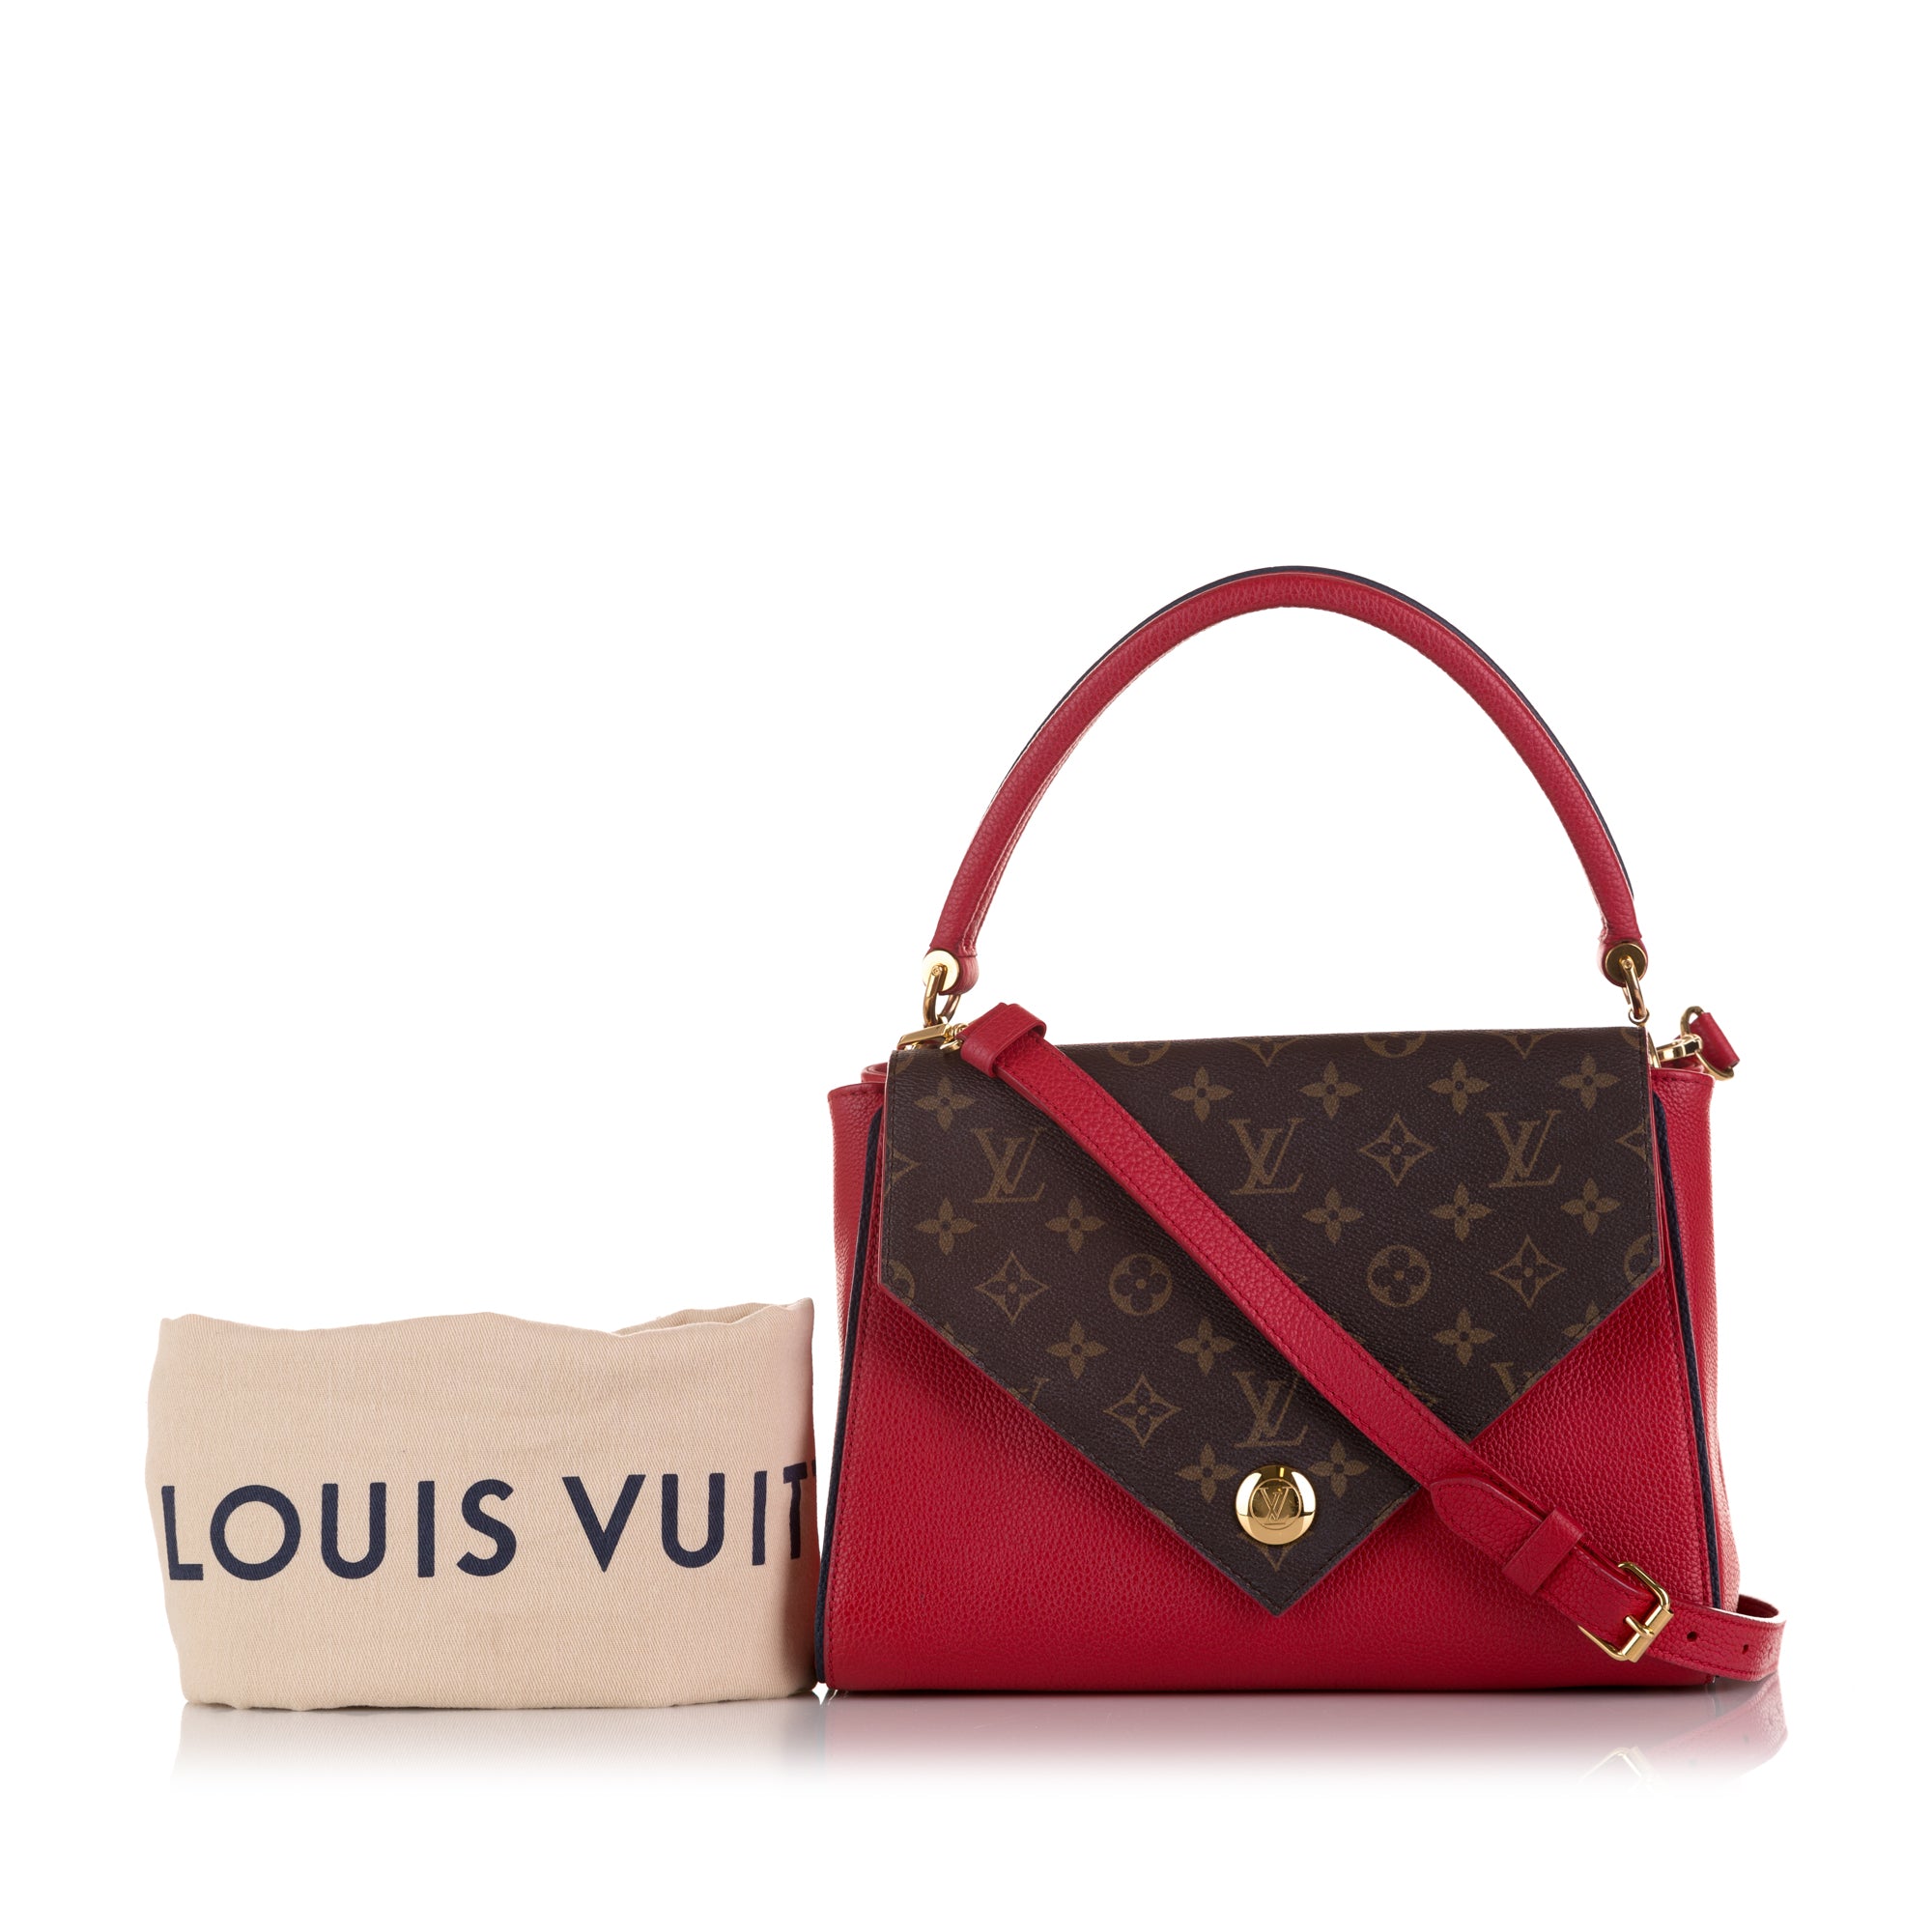 LOUIS VUITTON Double V Monogram Red Leather Tote Shoulder Bag